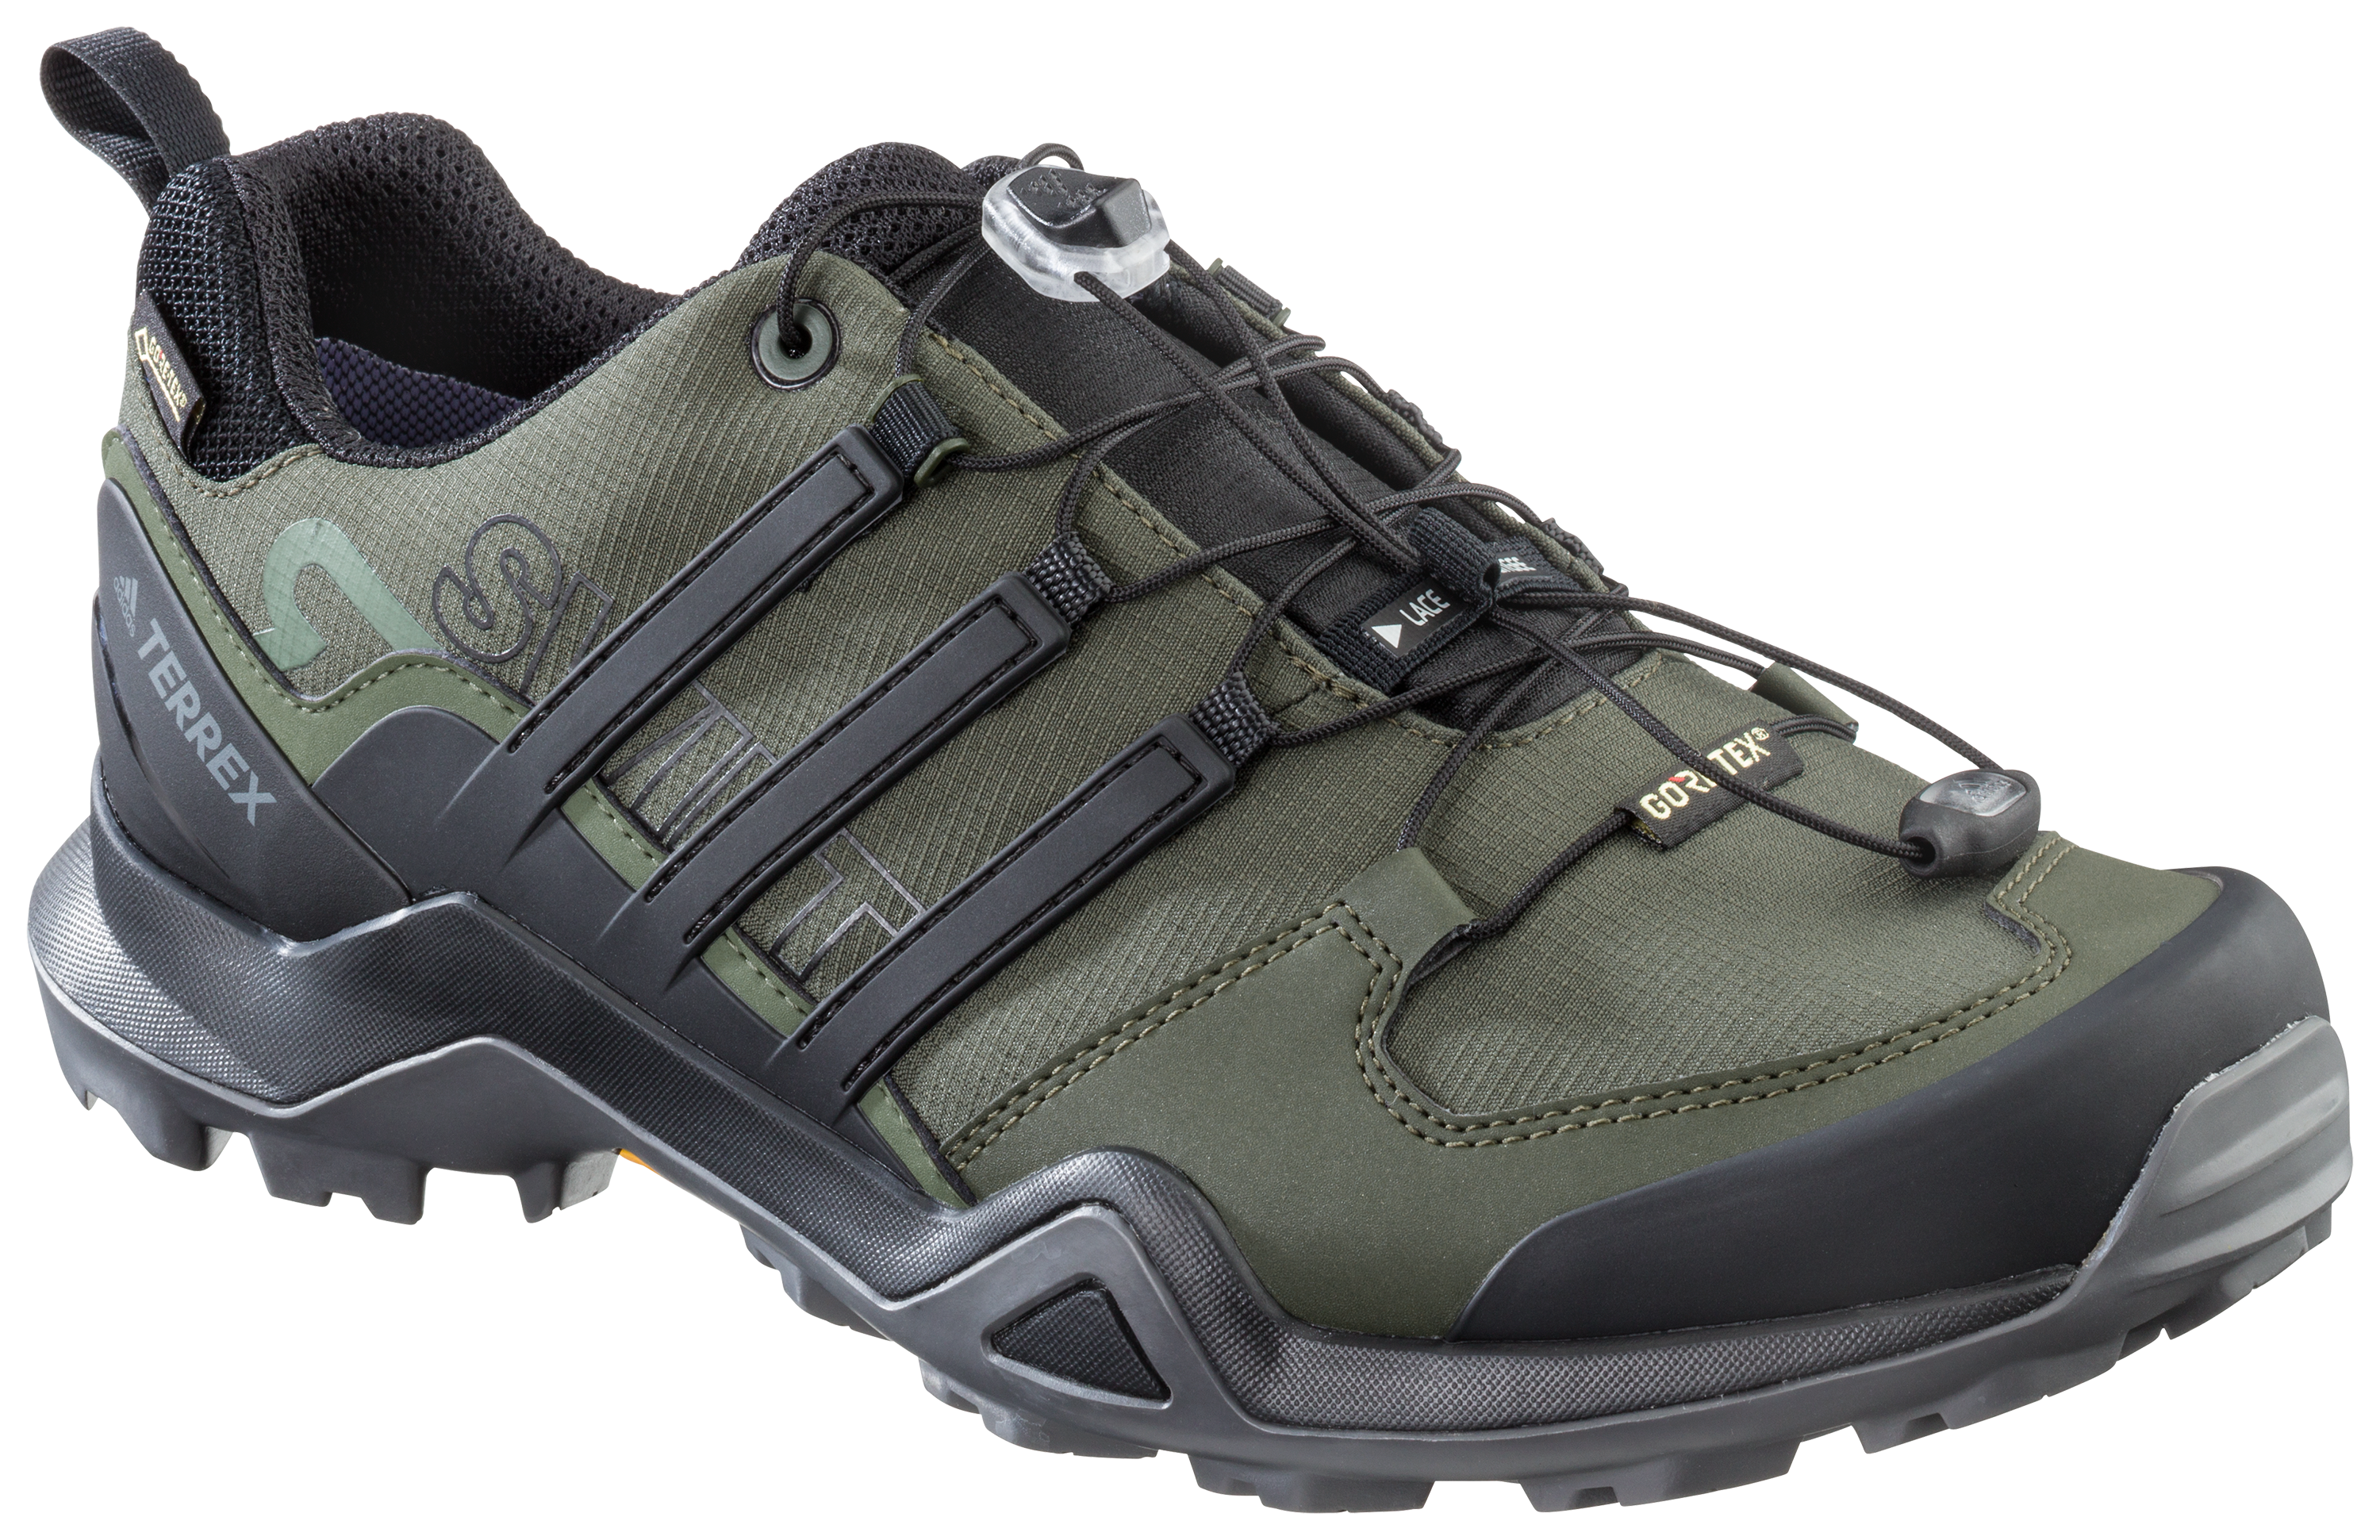 adidas Outdoor Terrex Swift R2 GTX Hiking Shoes for Men